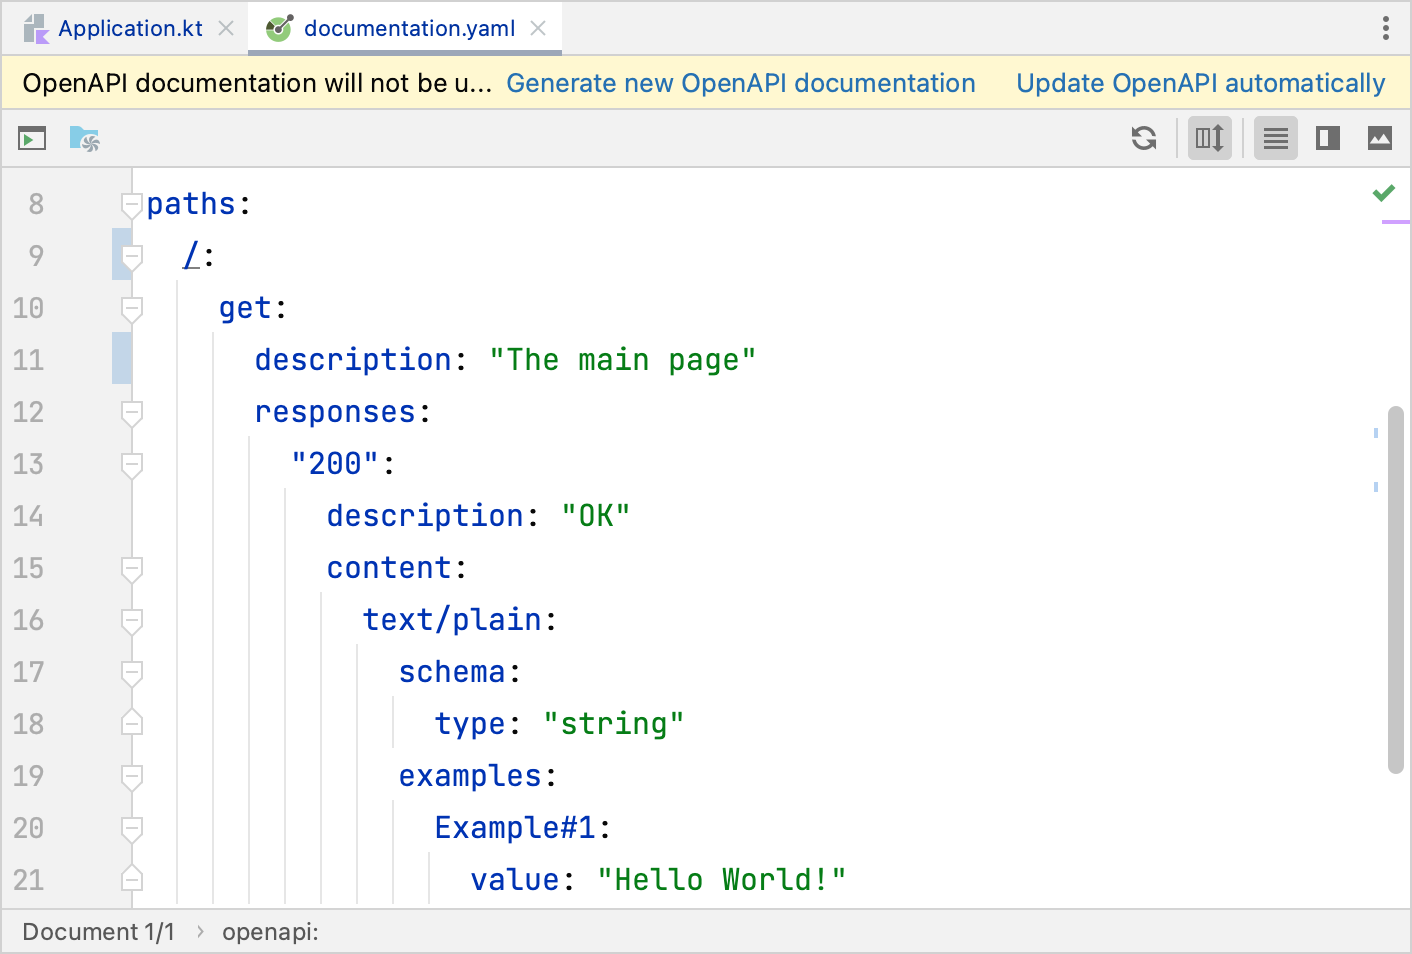 OpenAPI documentation